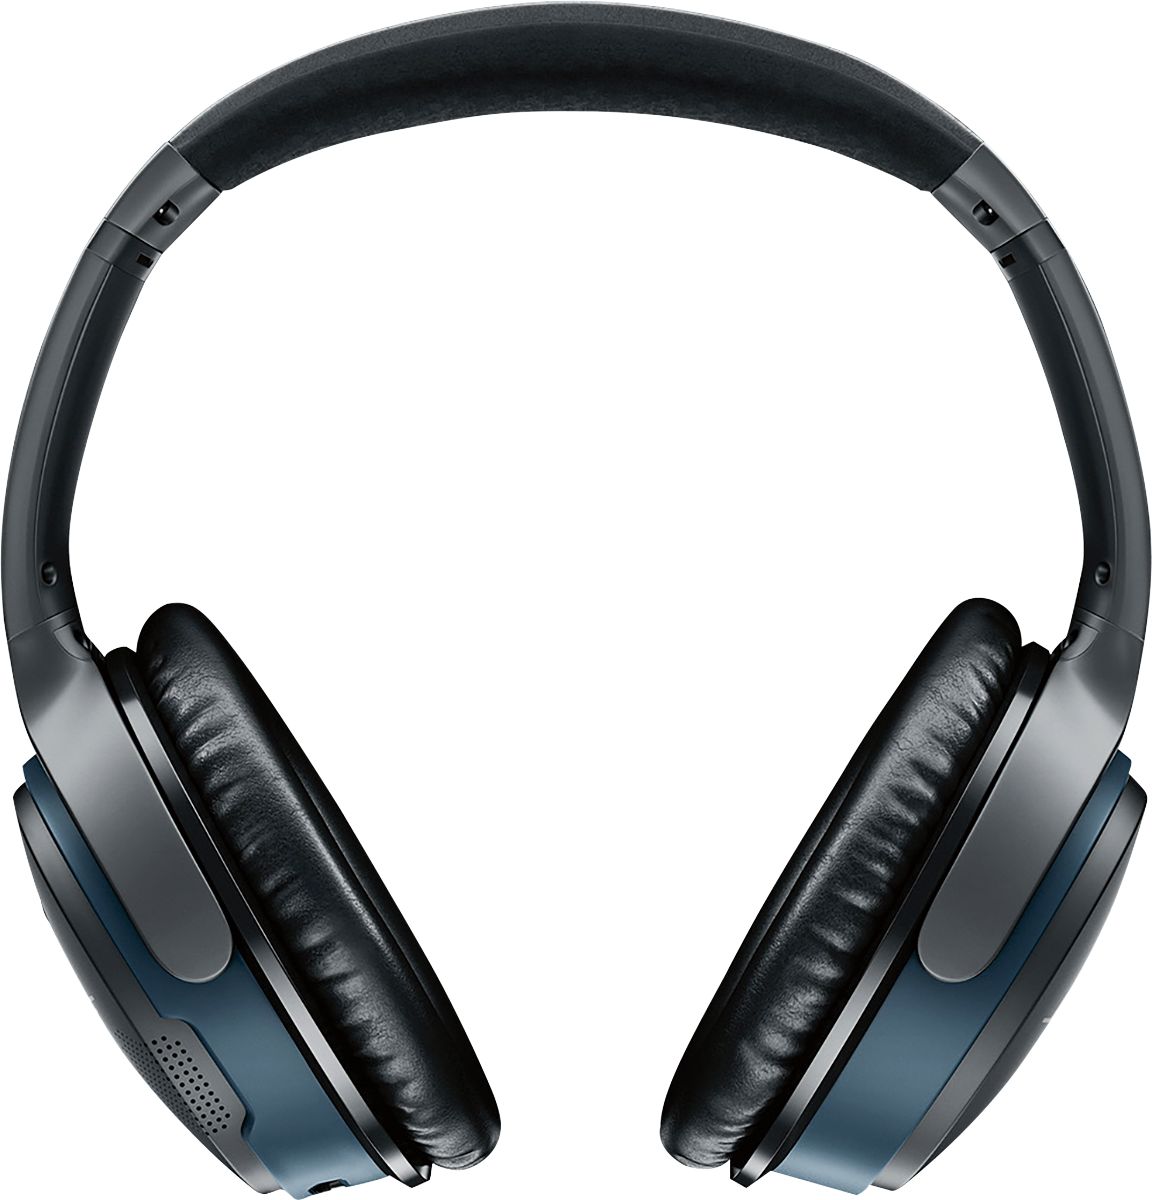 Angle View: JVC - HA EC50BT Wireless In-Ear Headphones - Yellow